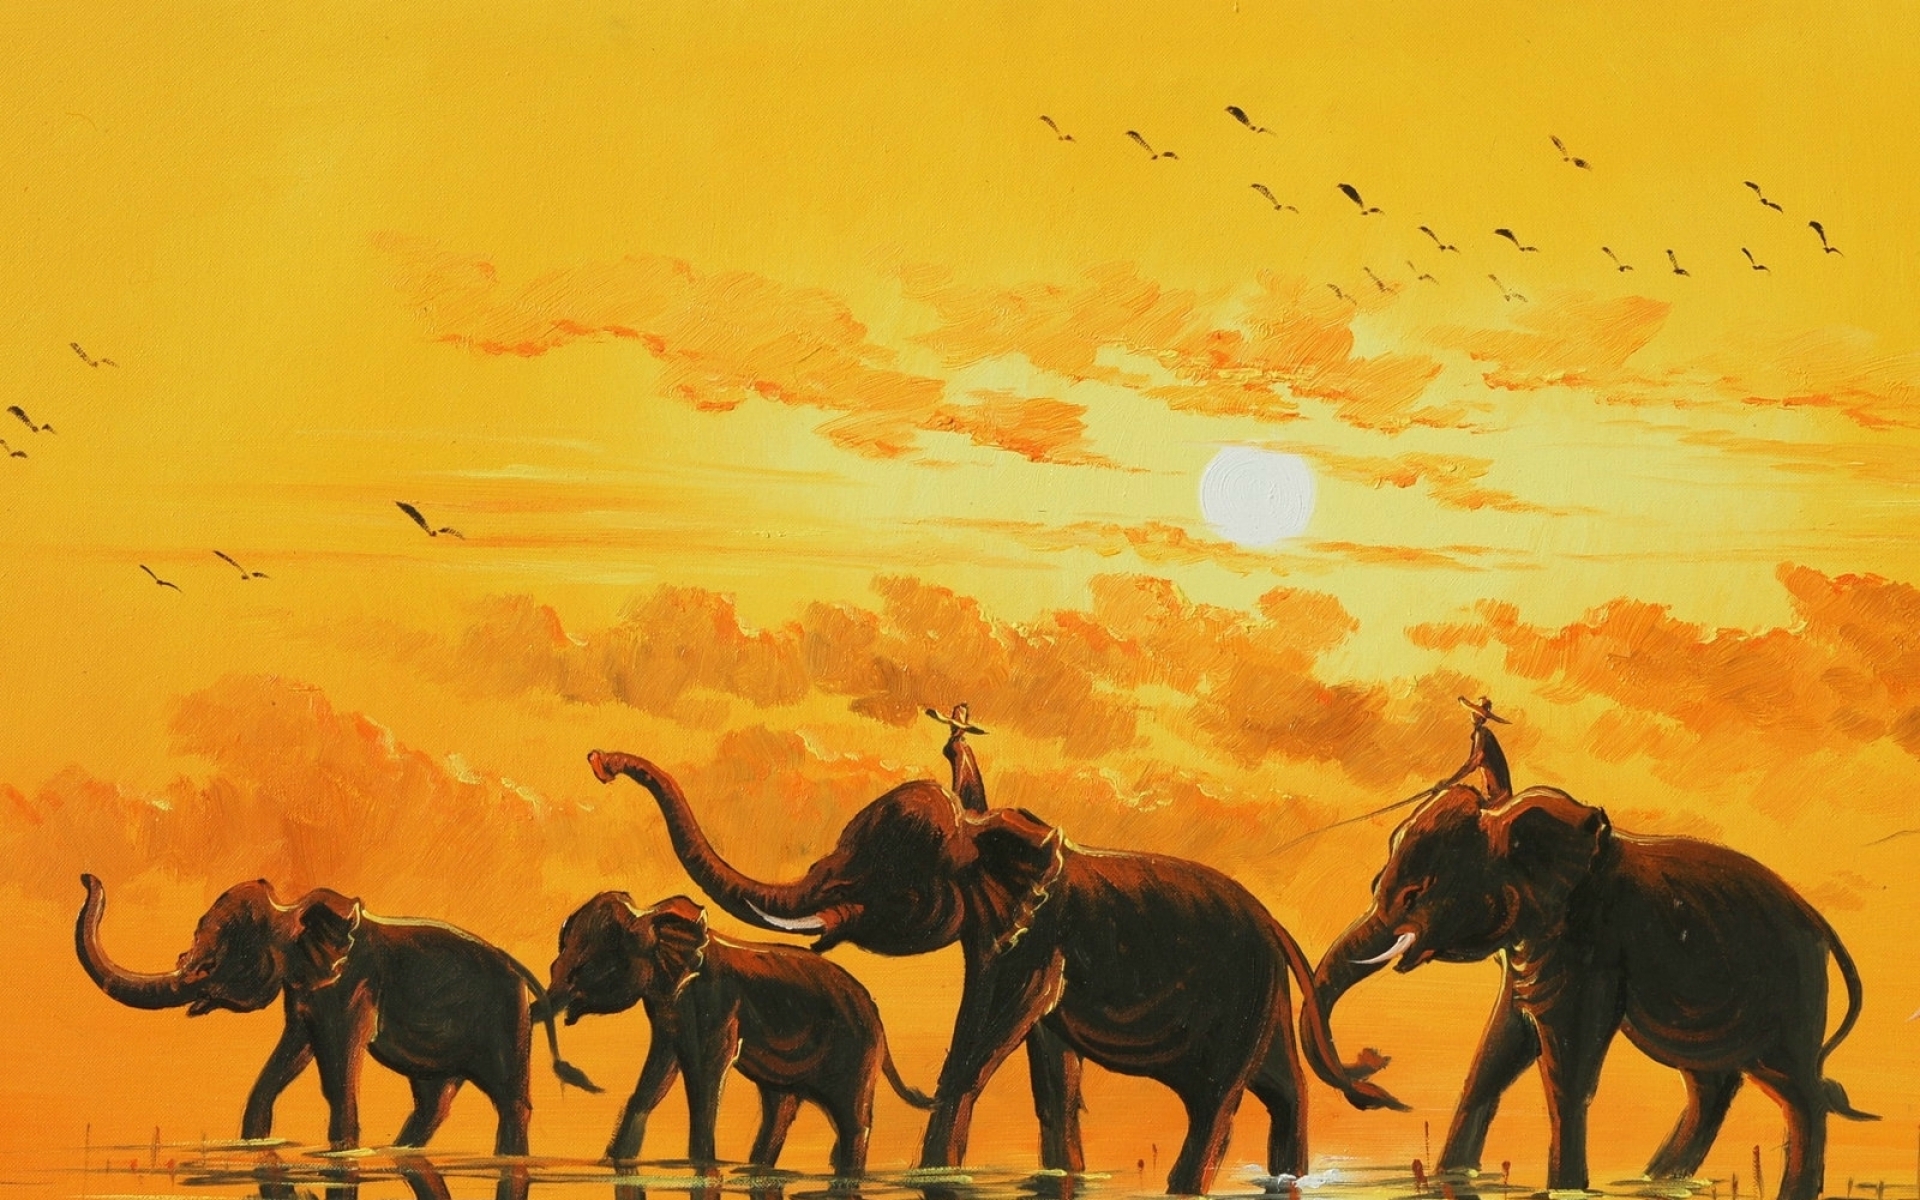 Download Art Paintings Elephant Artistic Wallpaper 1920x1200 Full HD 1920x1200